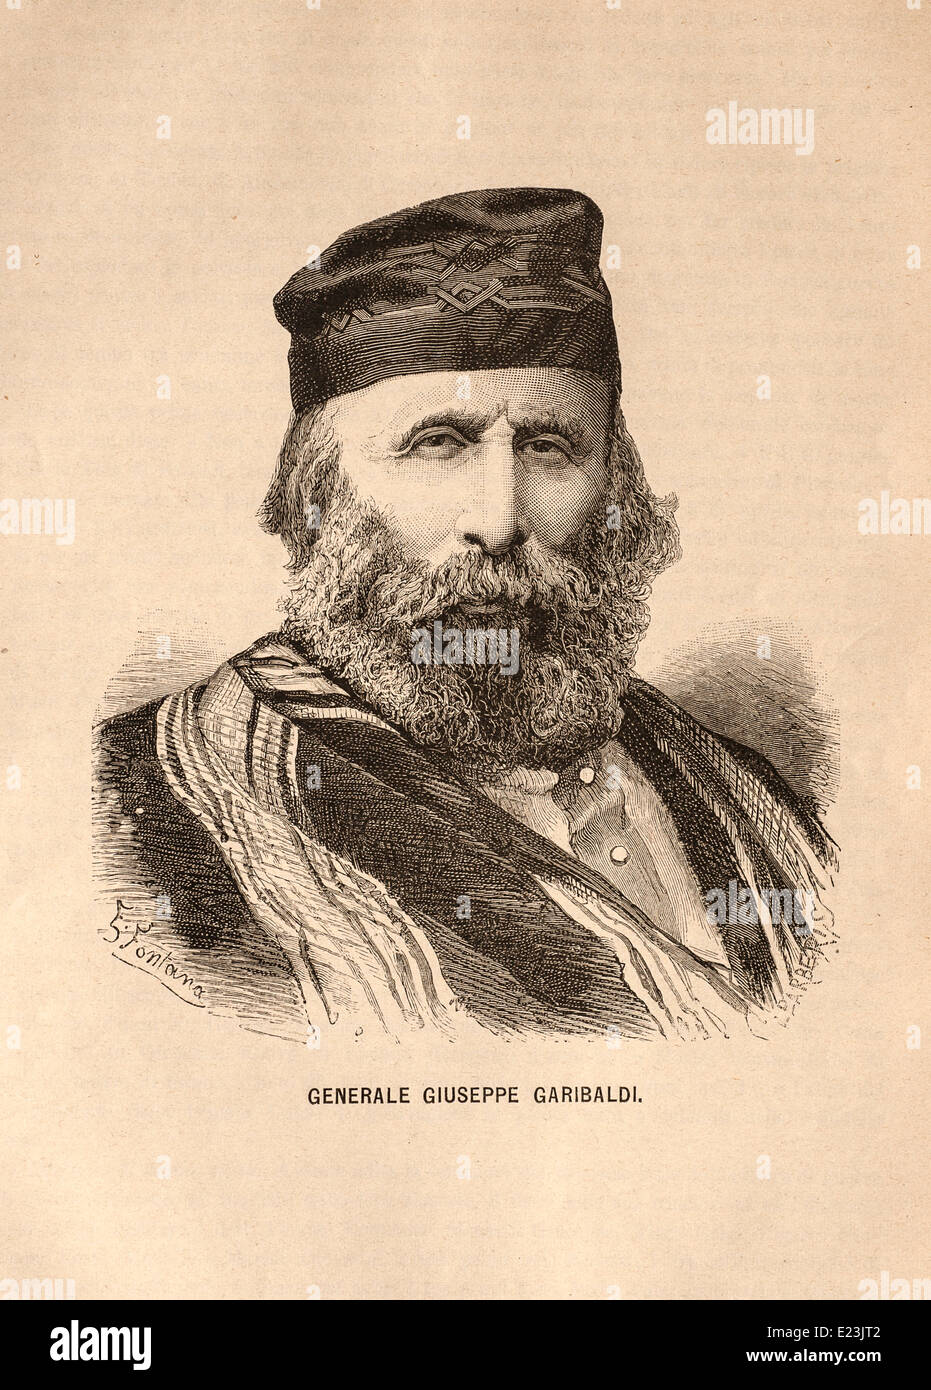 Giuseppe Mazzini du livre de Jessie W. Mario de vie de Mazzini. Le général Giuseppe Garibaldi Banque D'Images